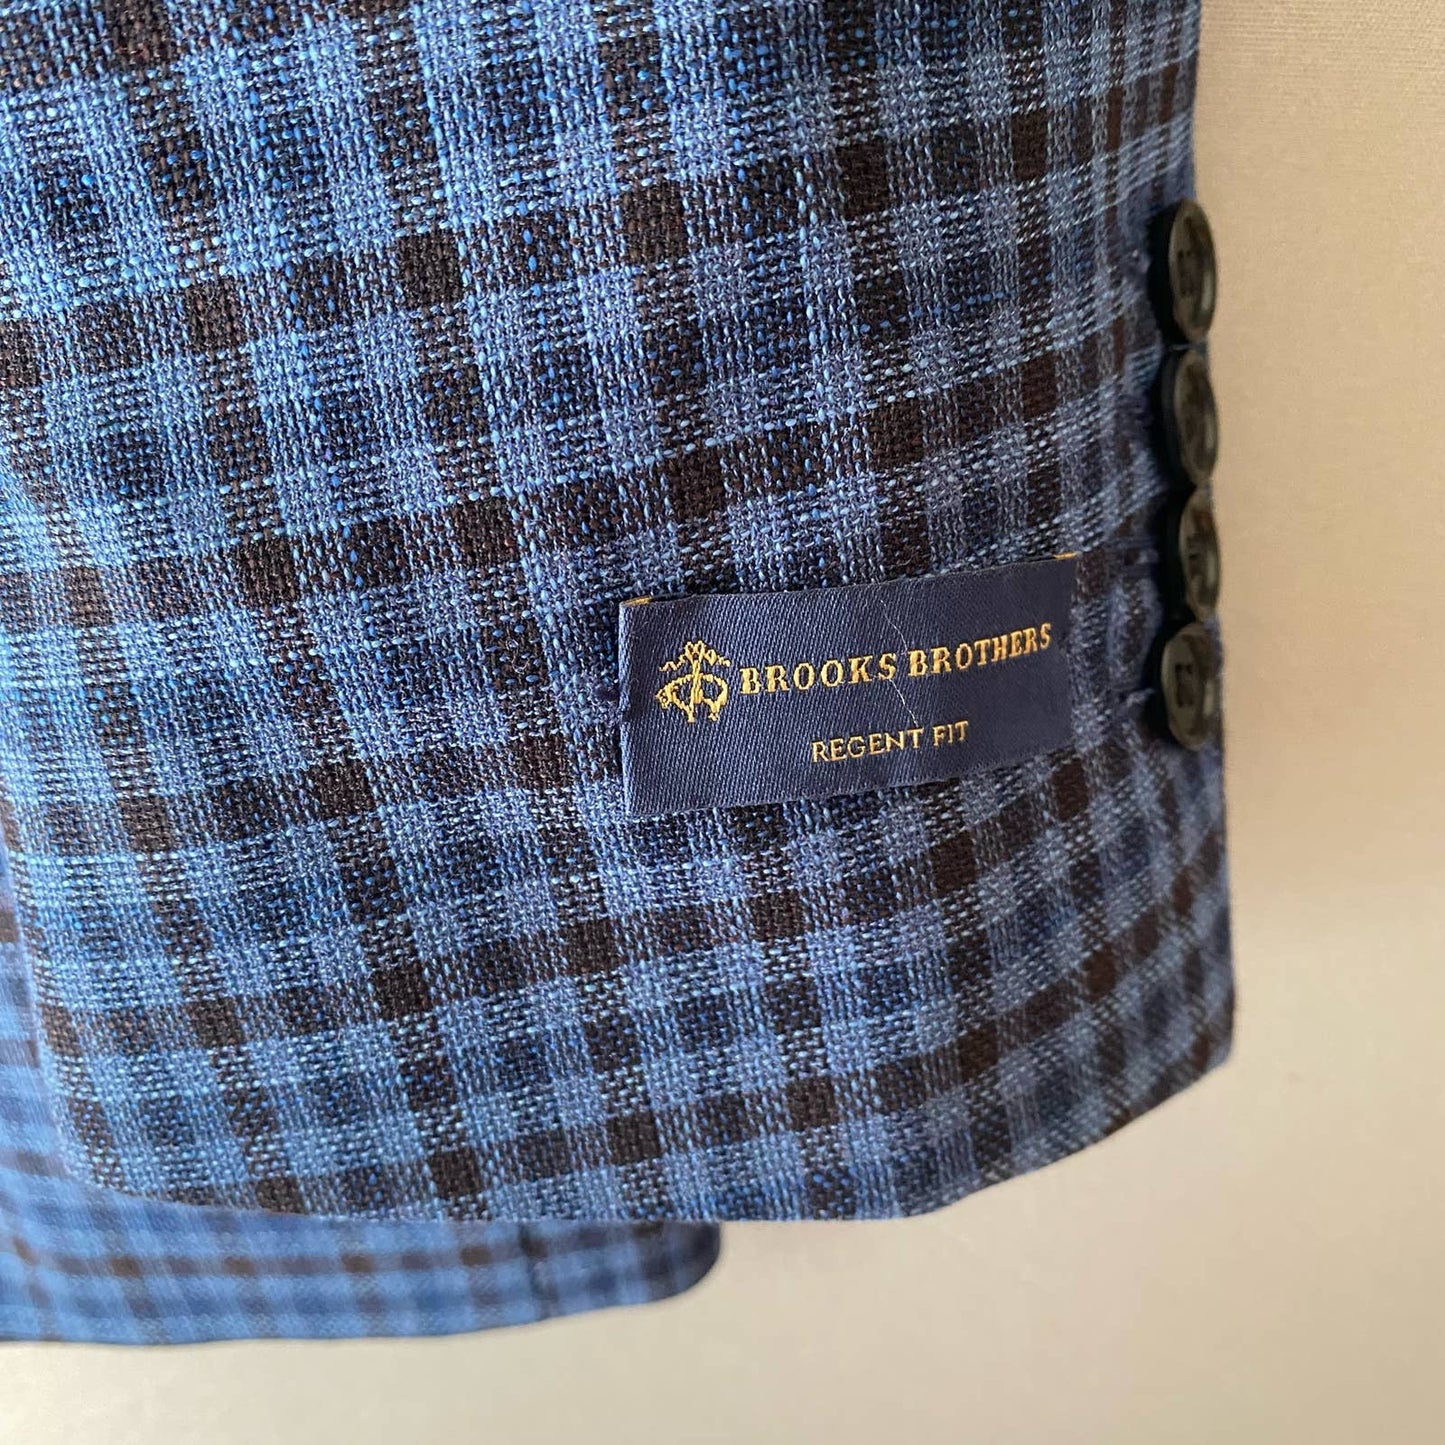 Brooks Brothers Regent fit sz 42R Hopsack Regent Fit Wool Sport Coat NWT